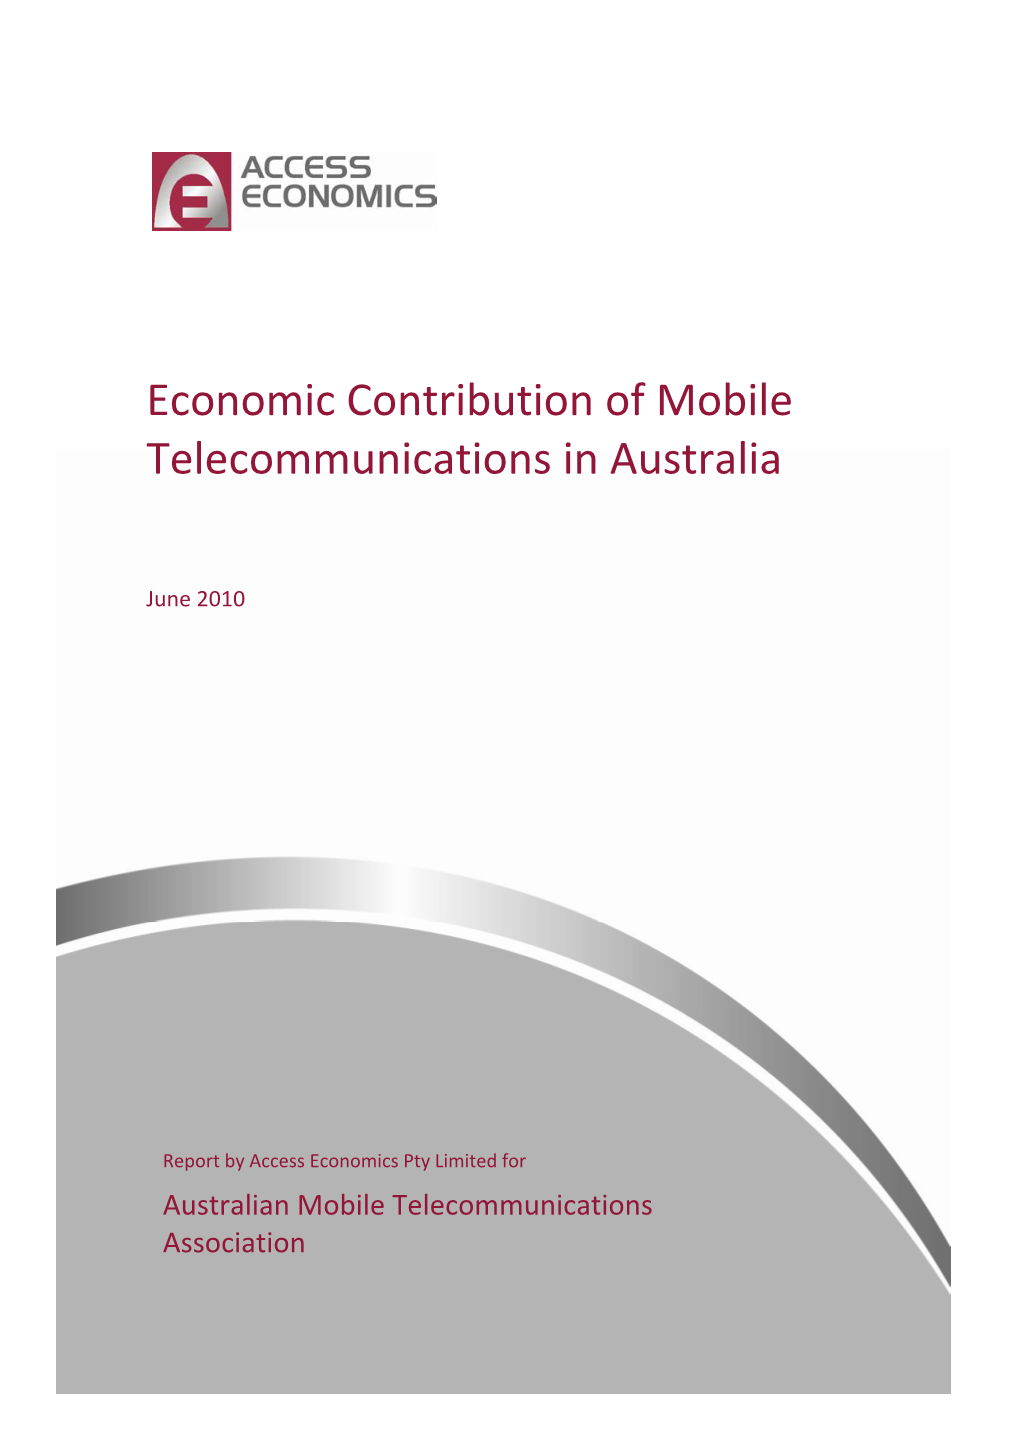 Economic Contribution of Mobile Telecommunications in Australia